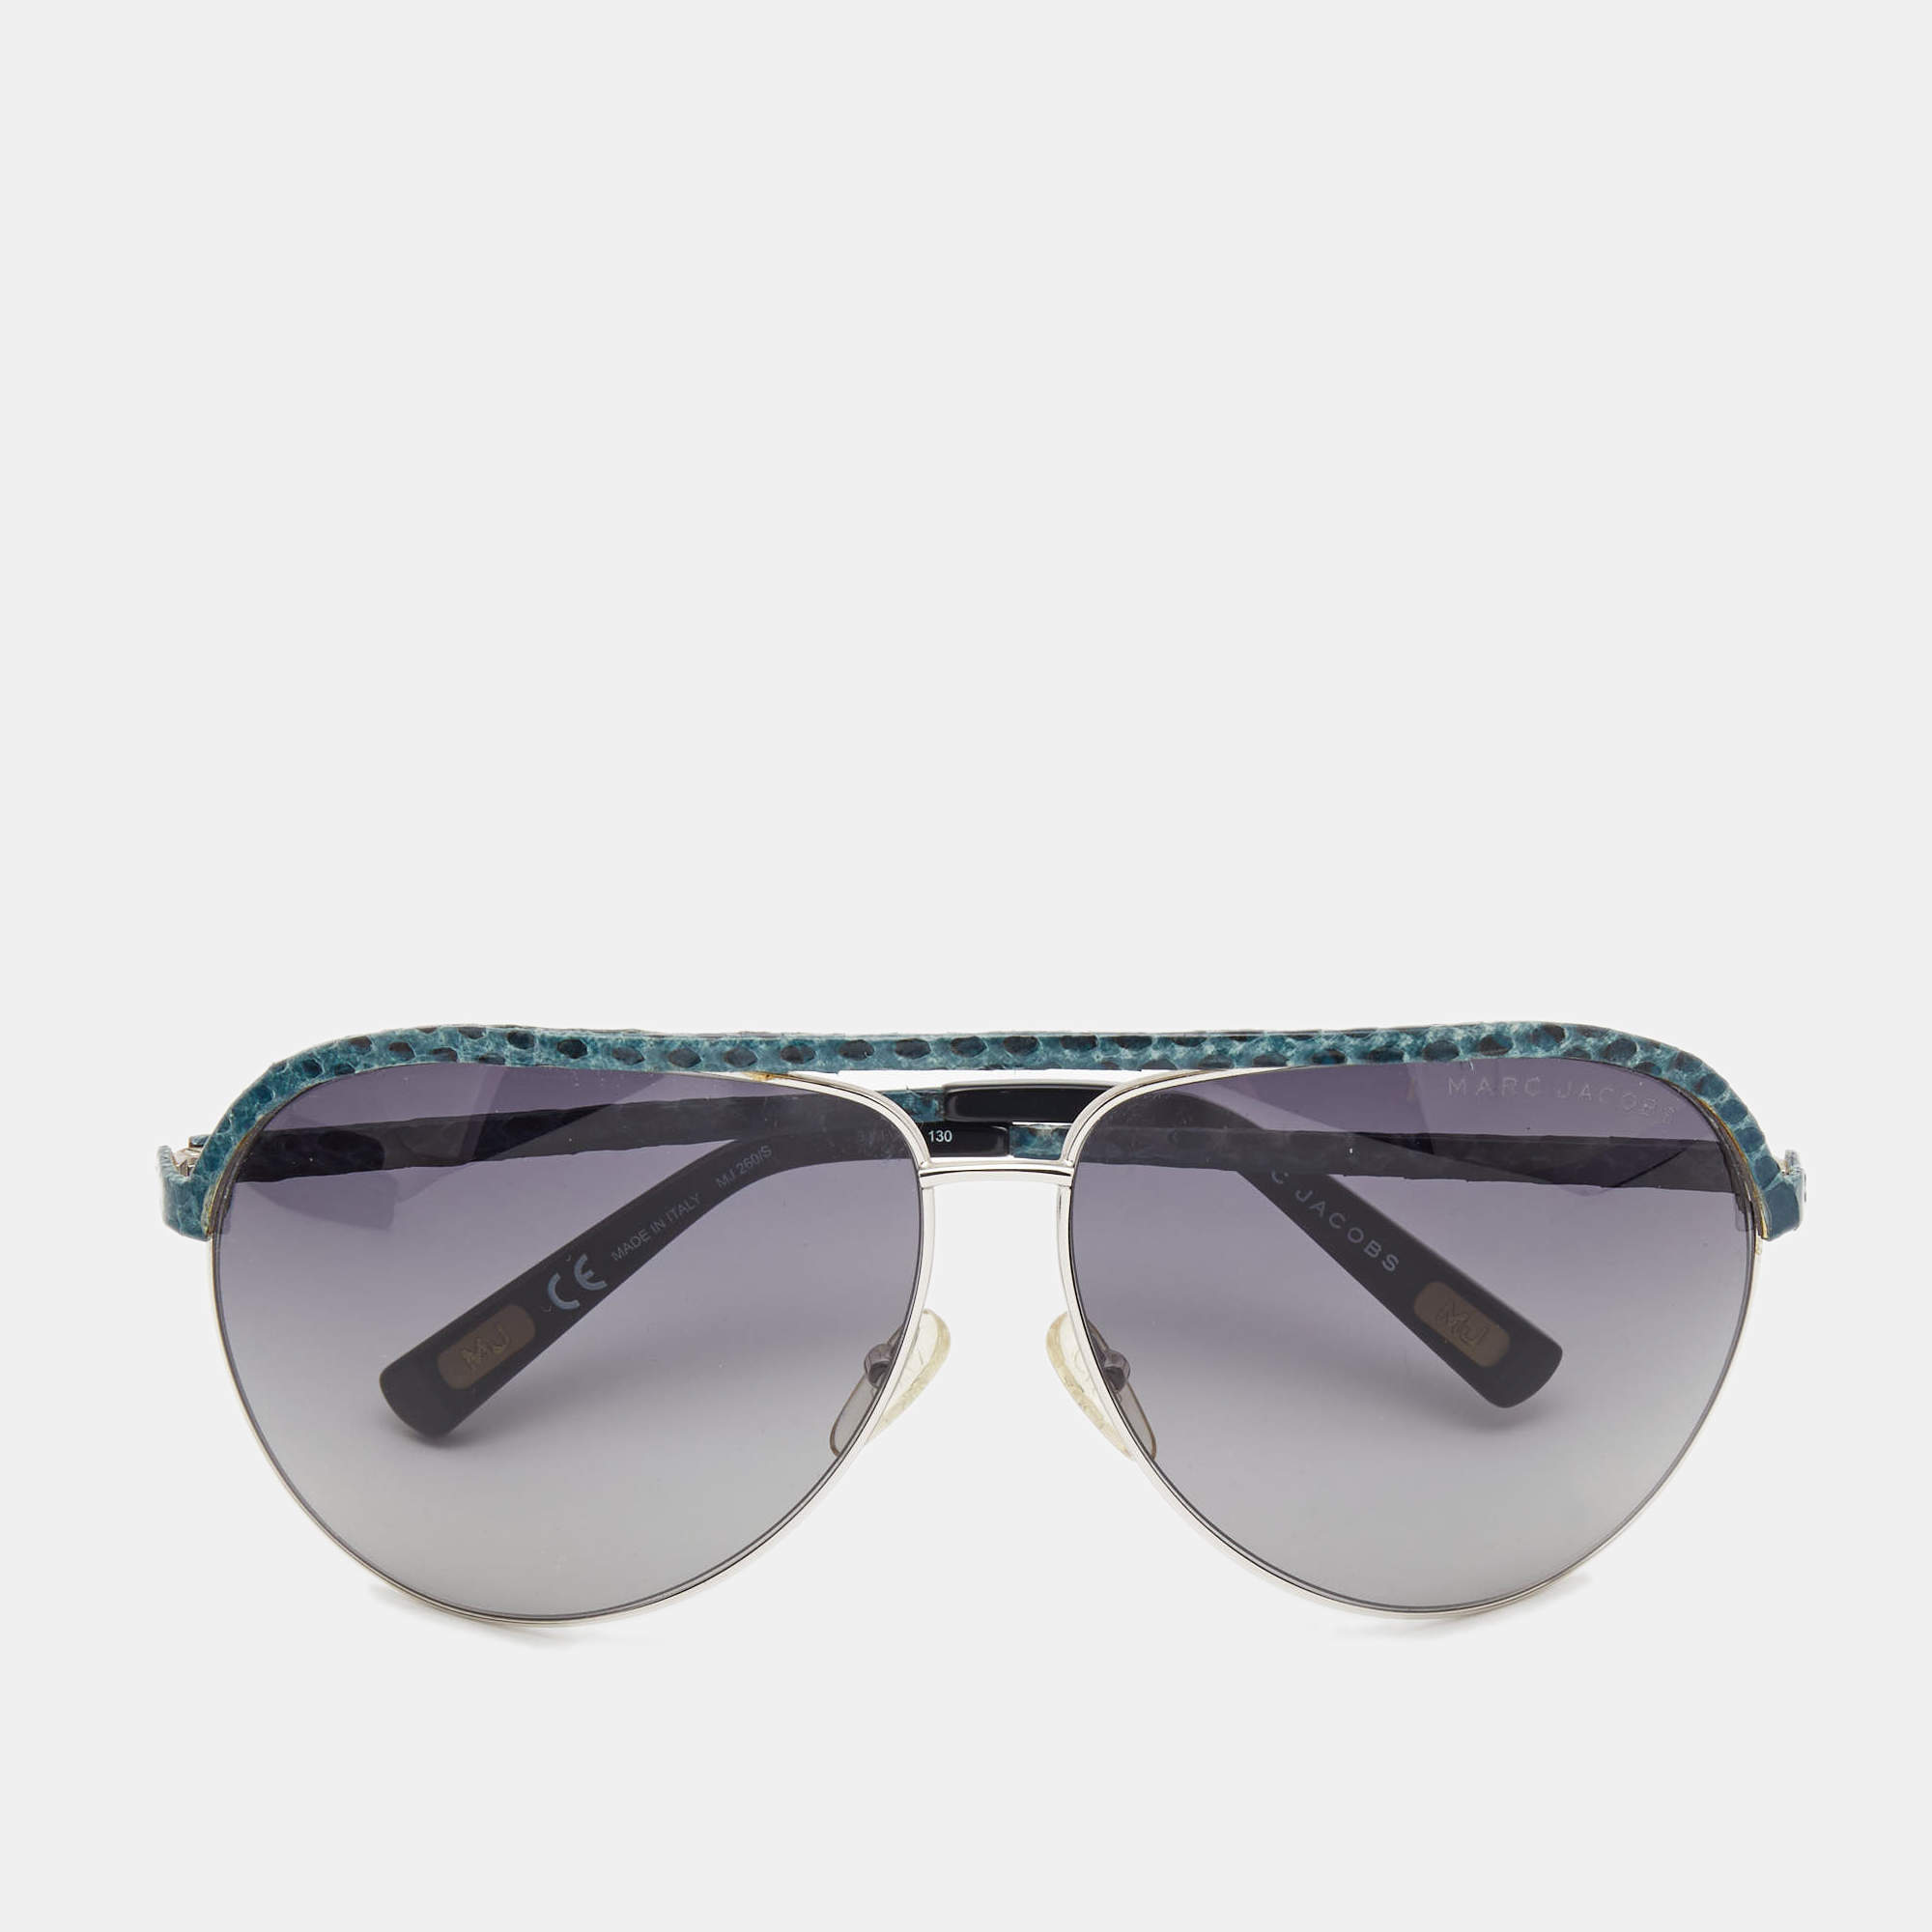 Marc Jacobs sunglasses MARC-584-S RHL/9O